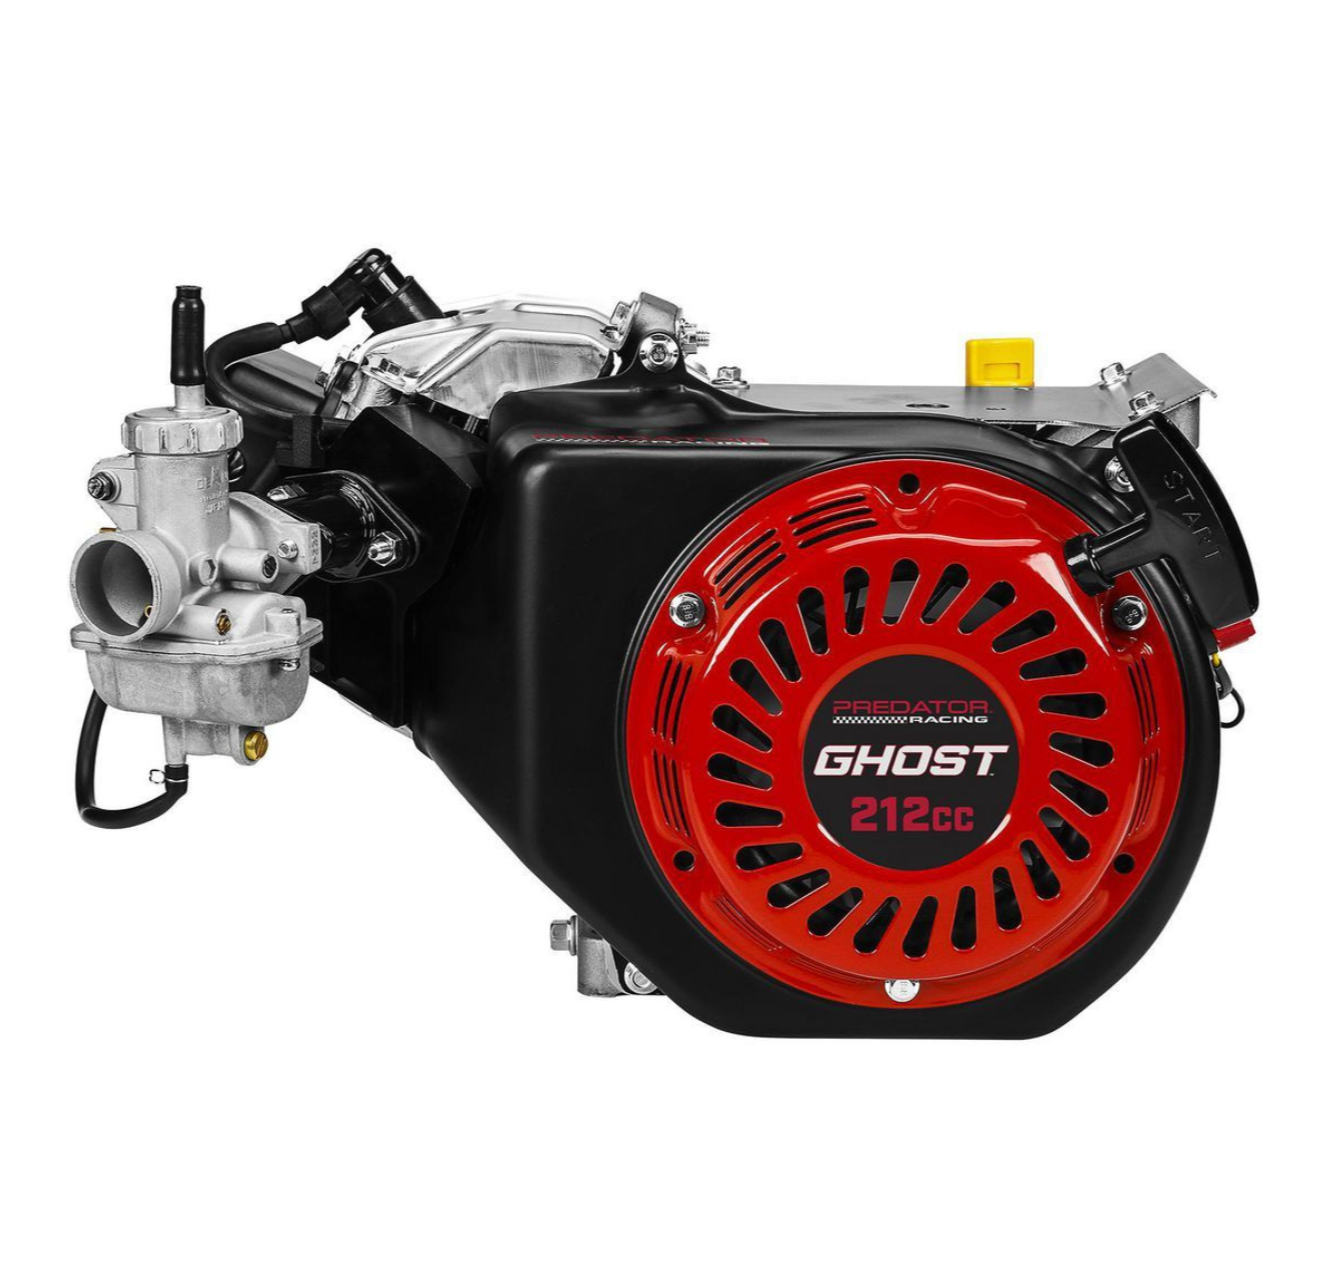 Predator 212cc GHOST Racing Engine Parts